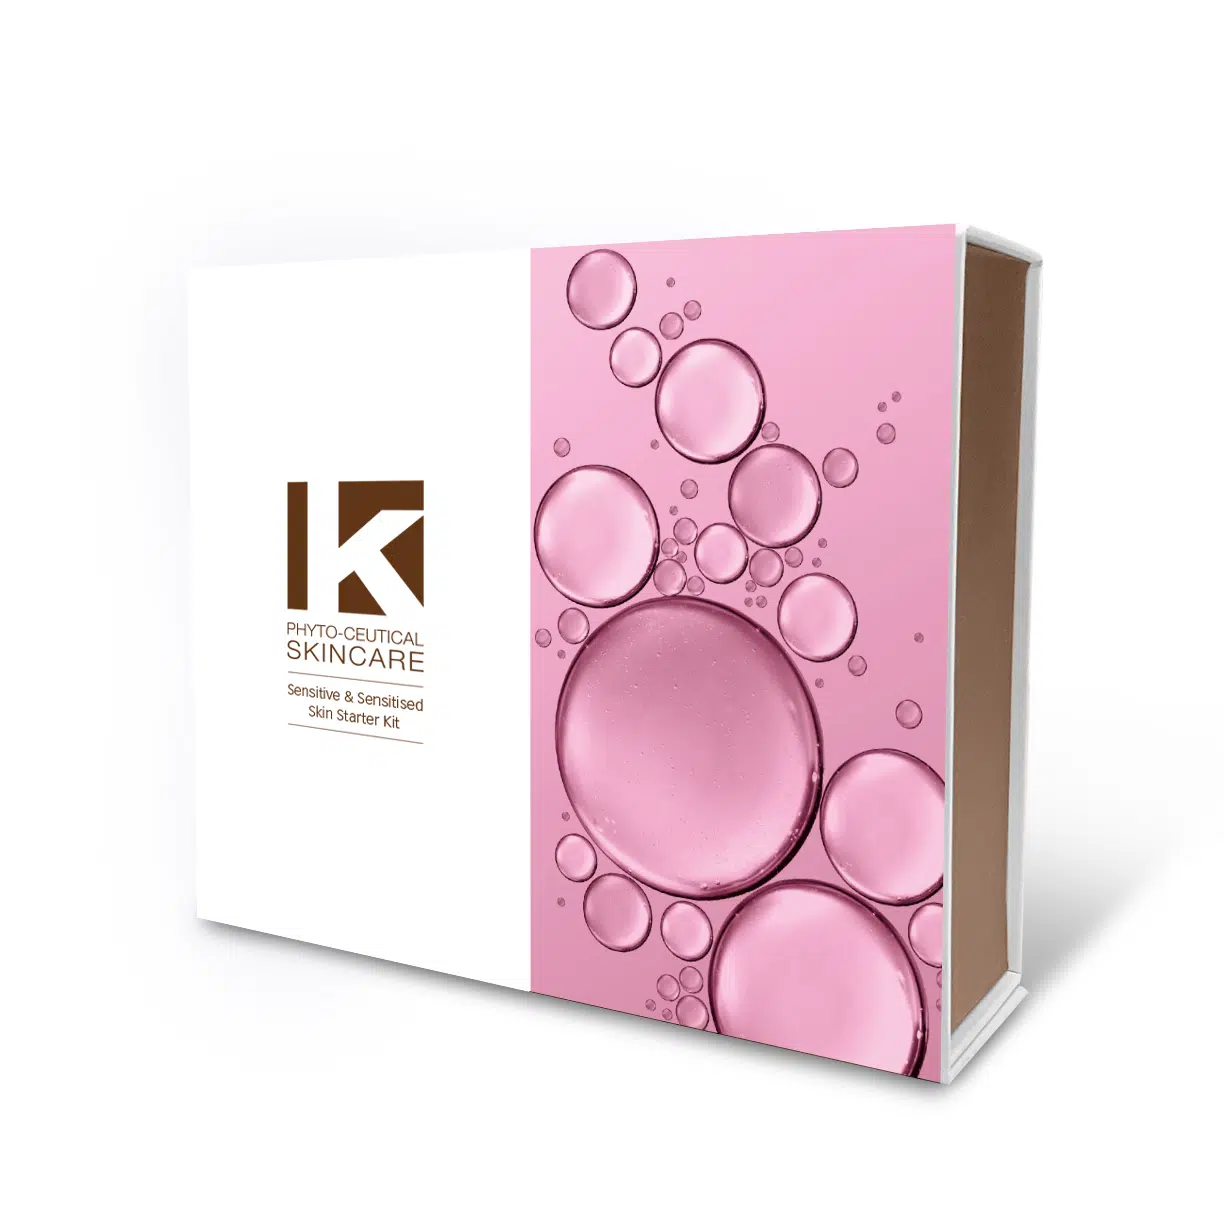 K Phyto-Ceutical Skincare - Sensitive & Sensitised Kit